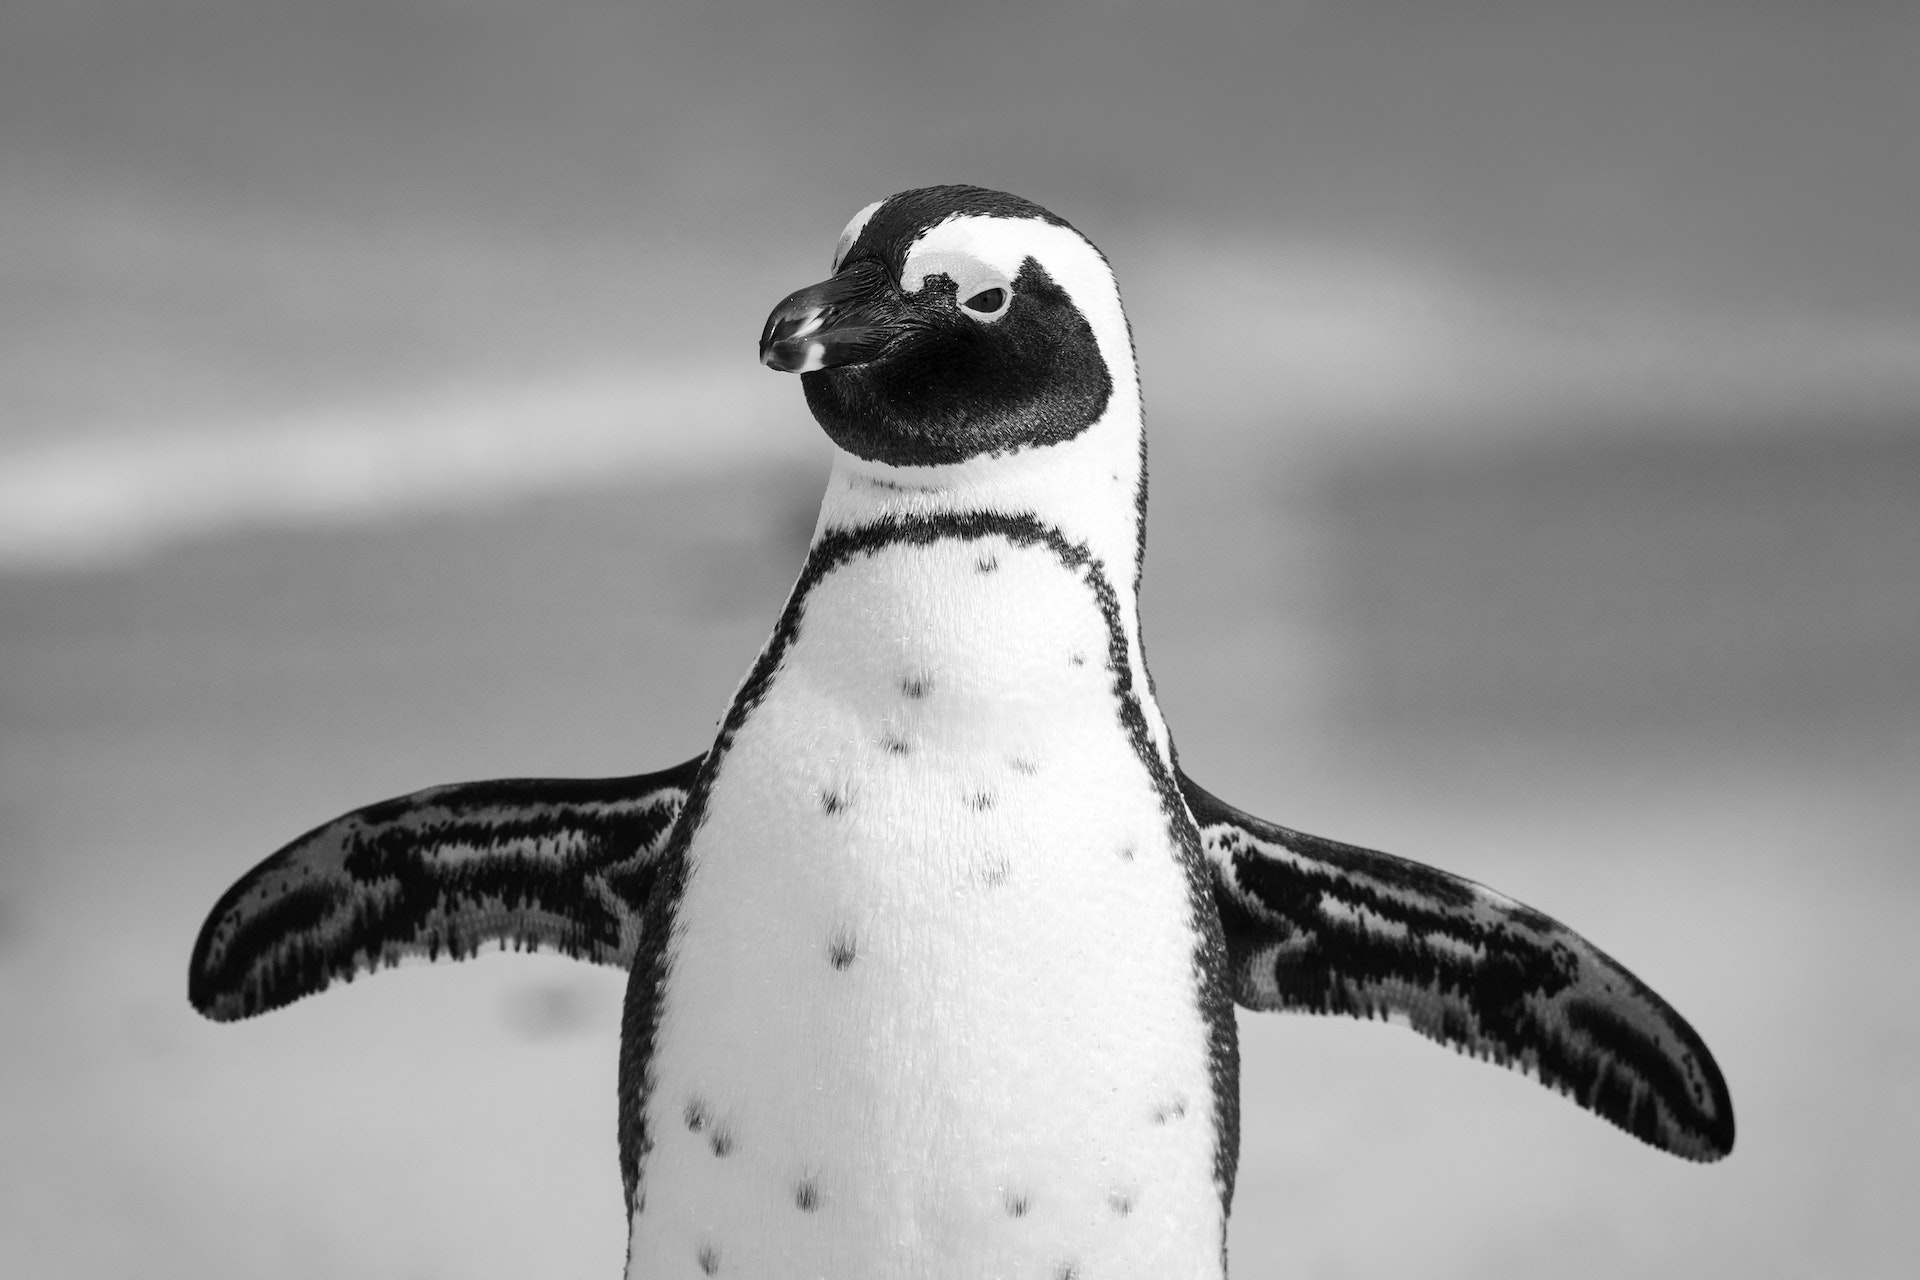 Photo by [Jean van der Meulen](https://www.pexels.com/photo/grayscale-photography-of-penguin-2078475/)